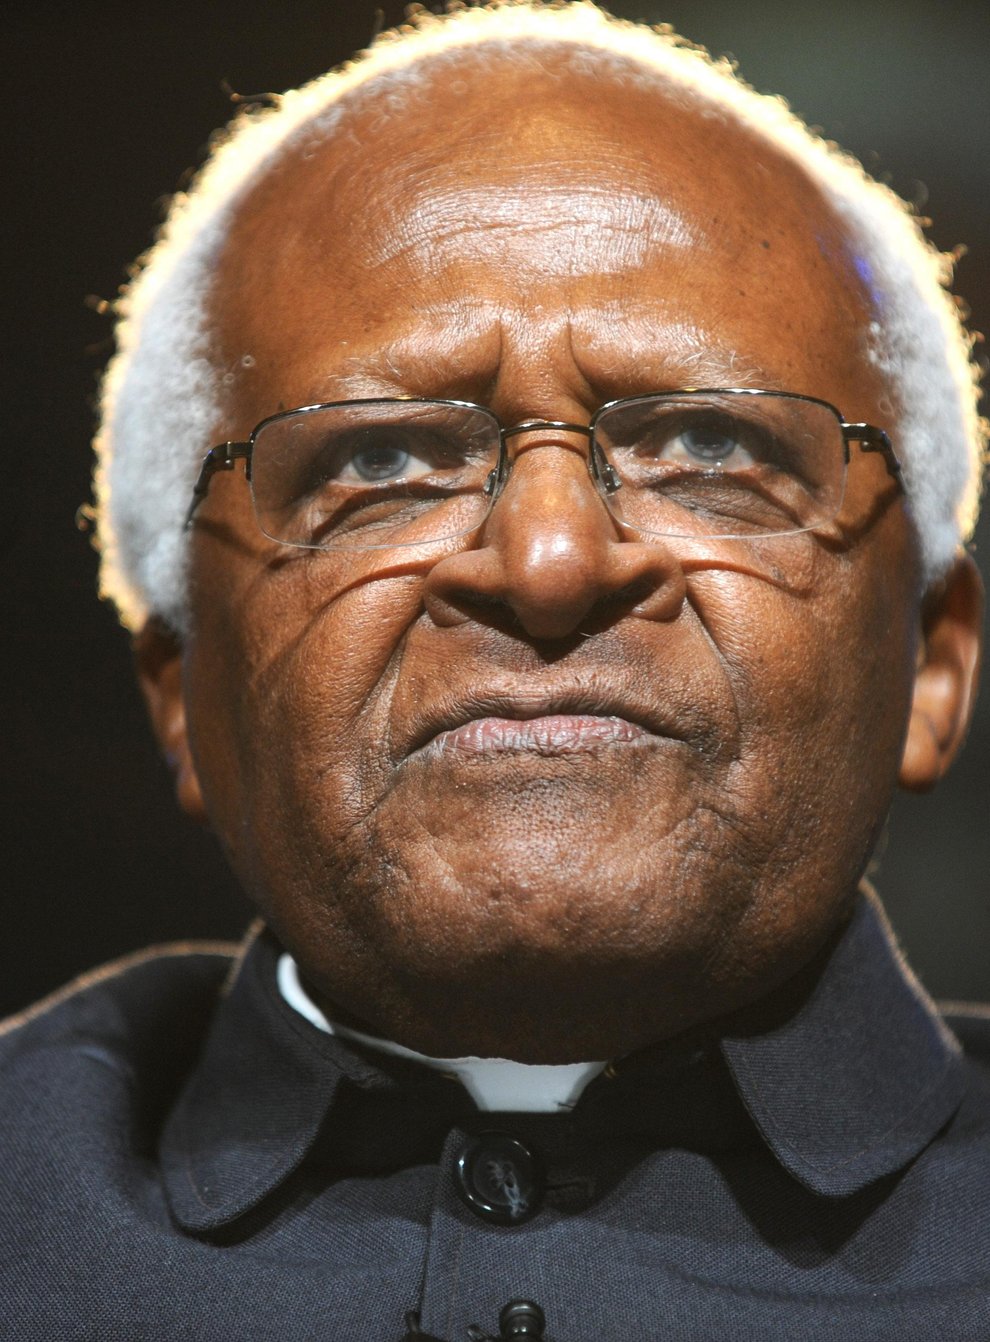 Archbishop Desmond Tutu (PA)